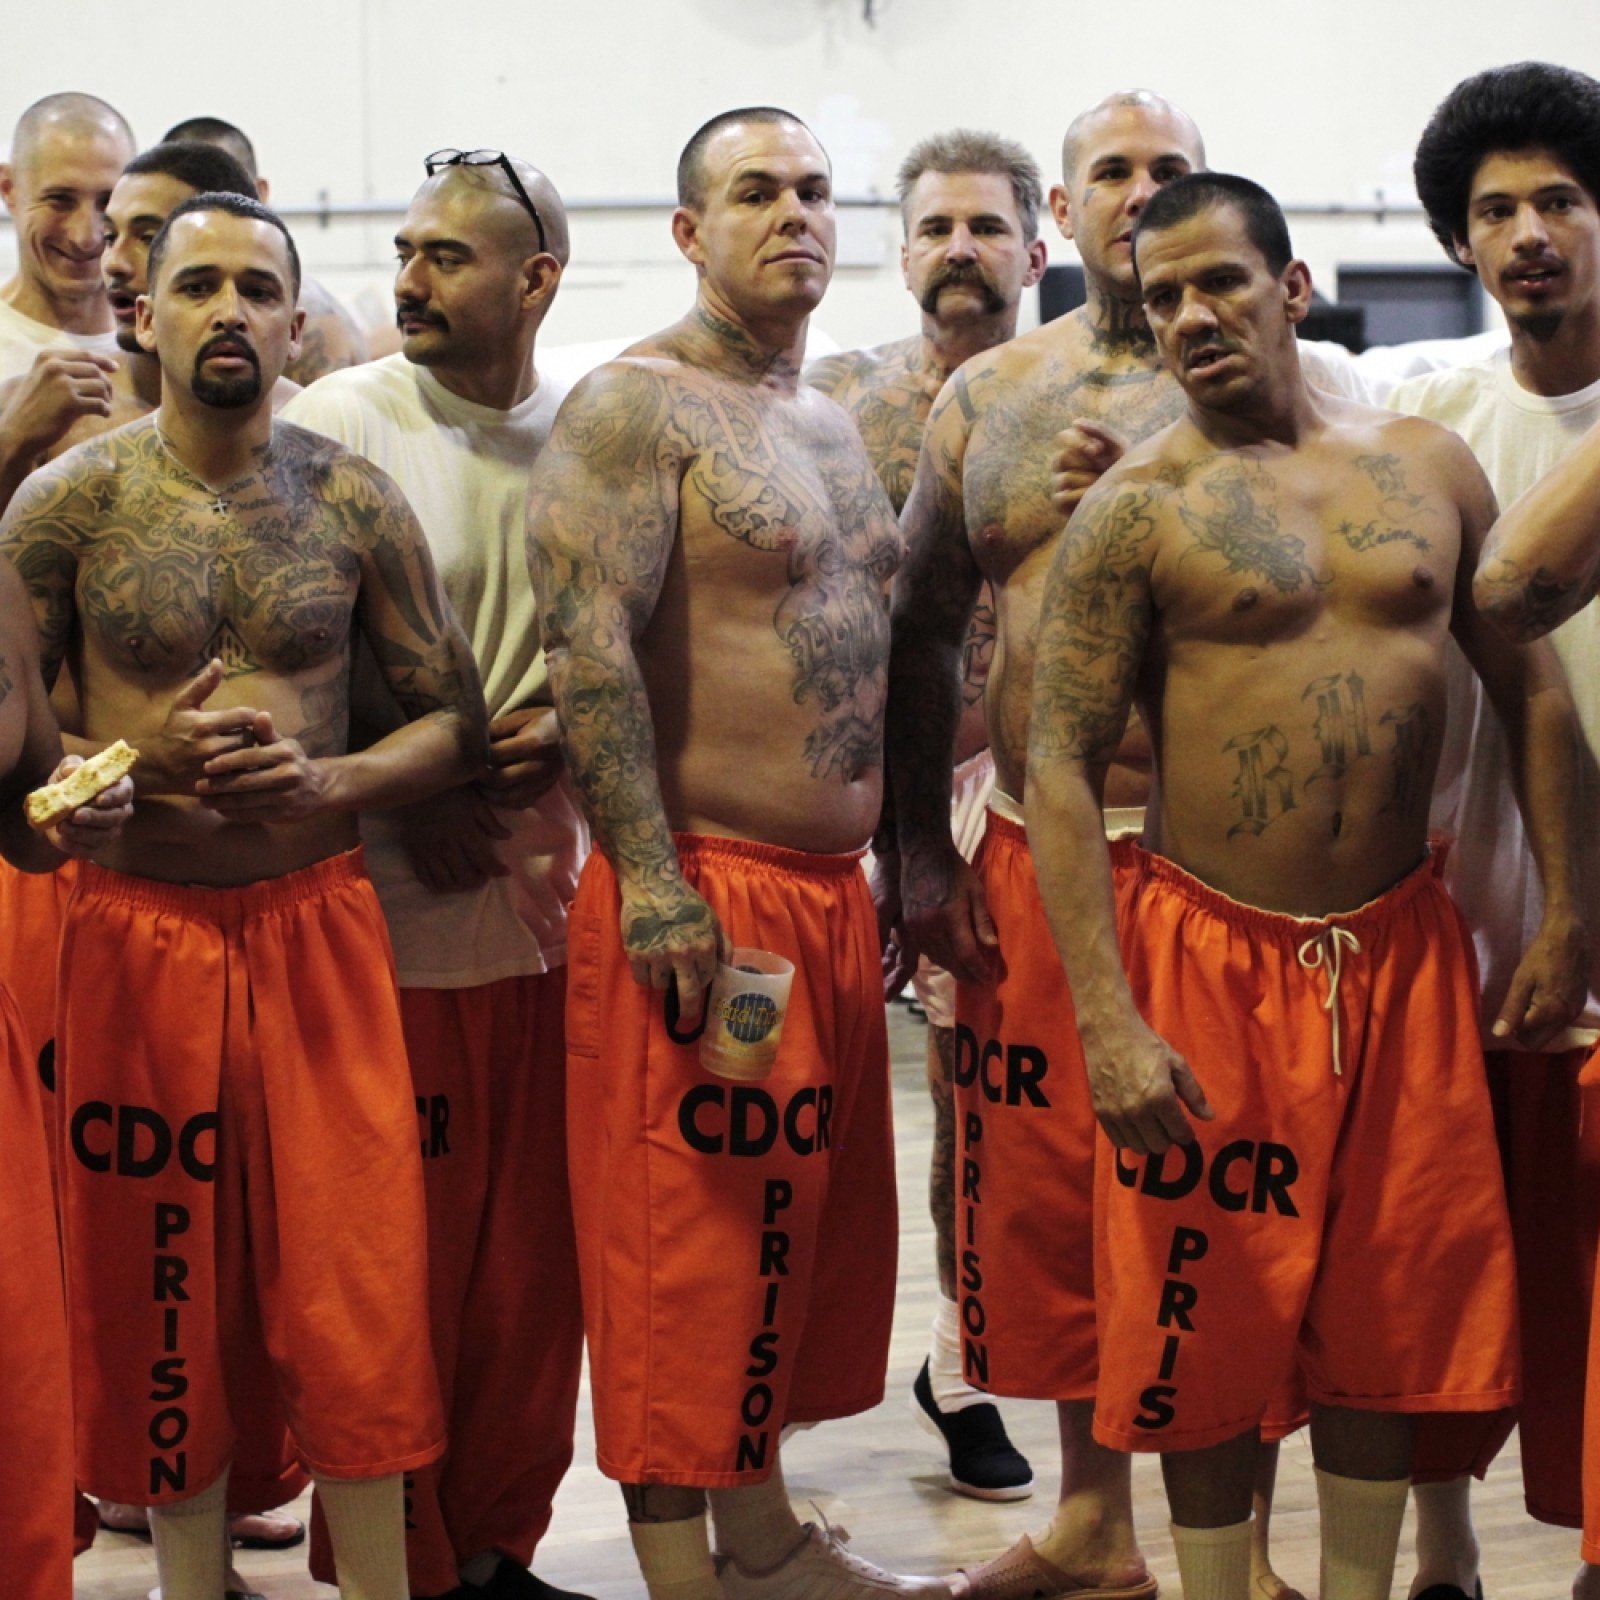 us-prison-inmates.jpg